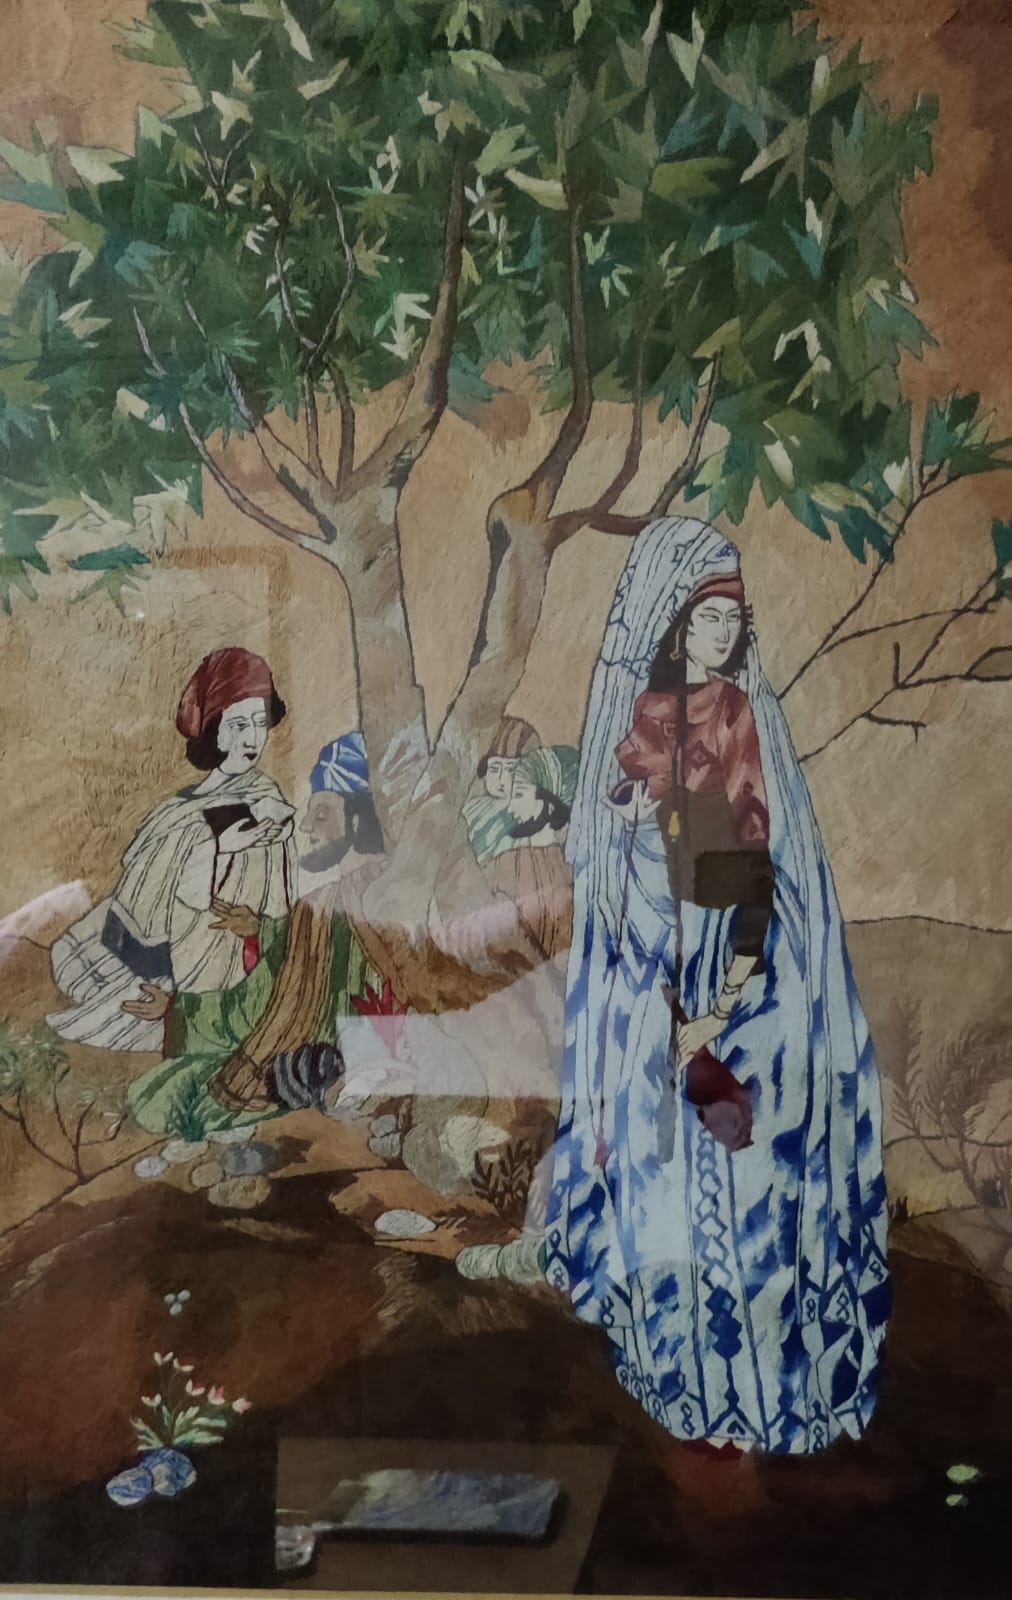 Muraqqa-i-chugtai painting in Embroidery ( Kasida work) free hand by Ms Salila Bedi ( daughter Of Brijender Syal)